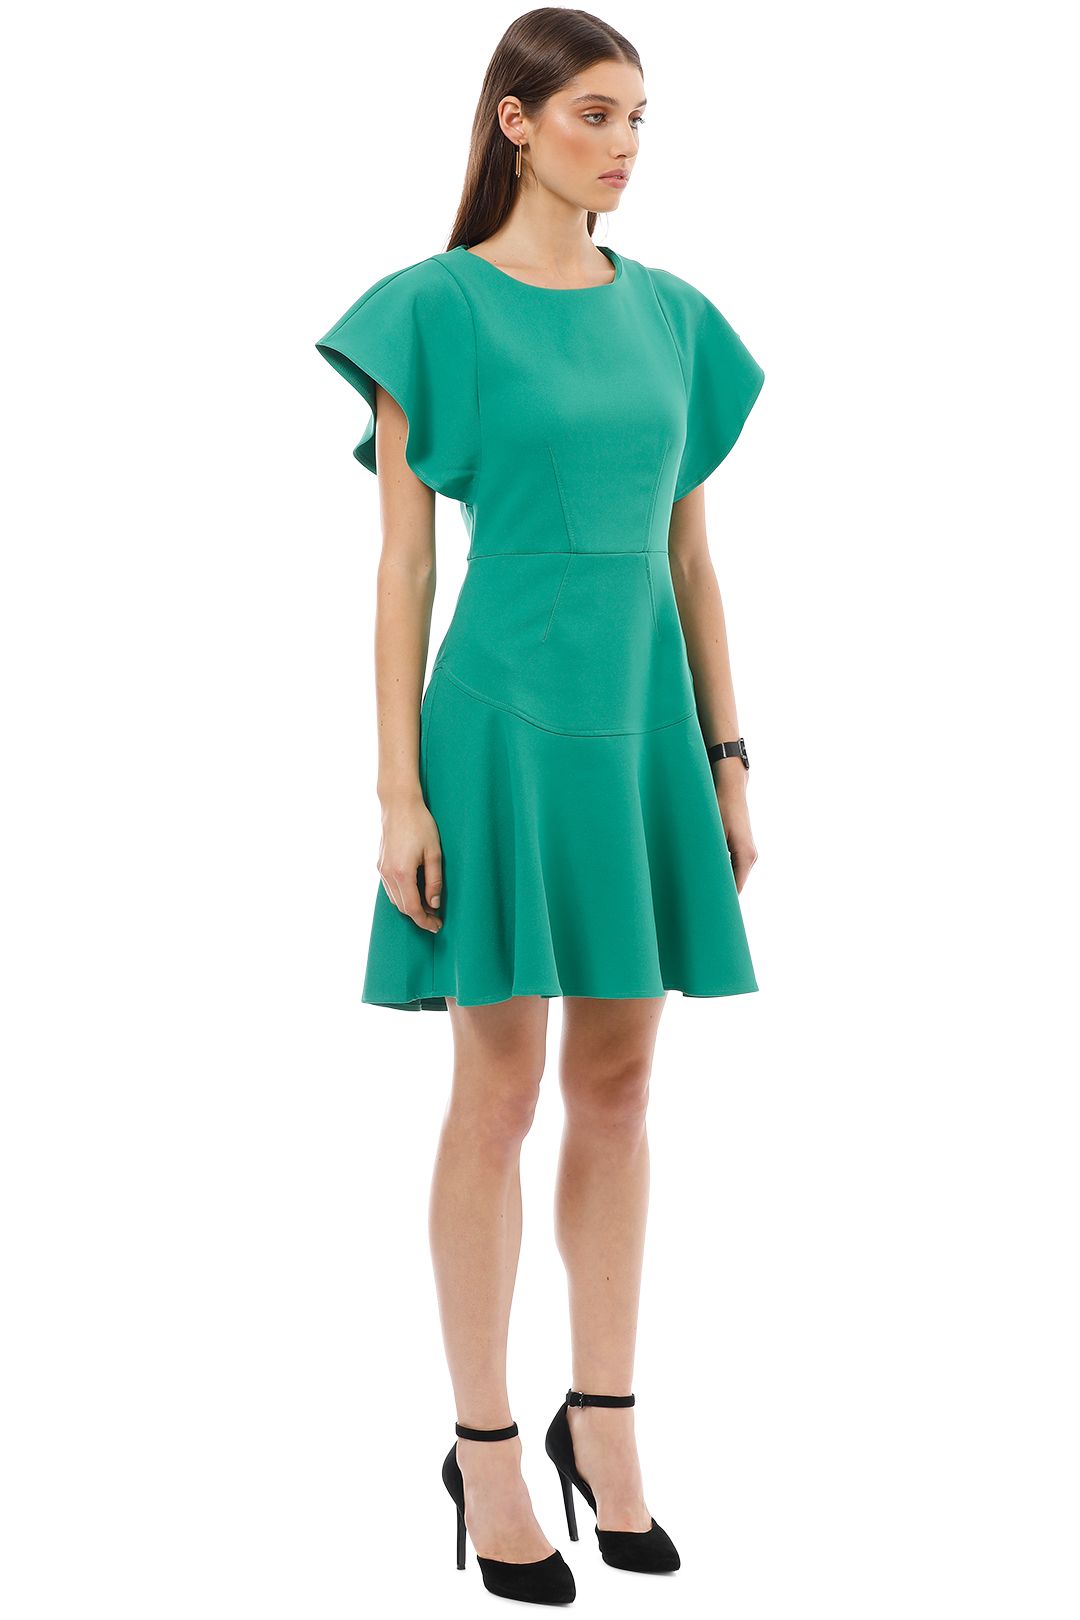 Closet London - Frill Sleeve Flared Dress - Green - Side